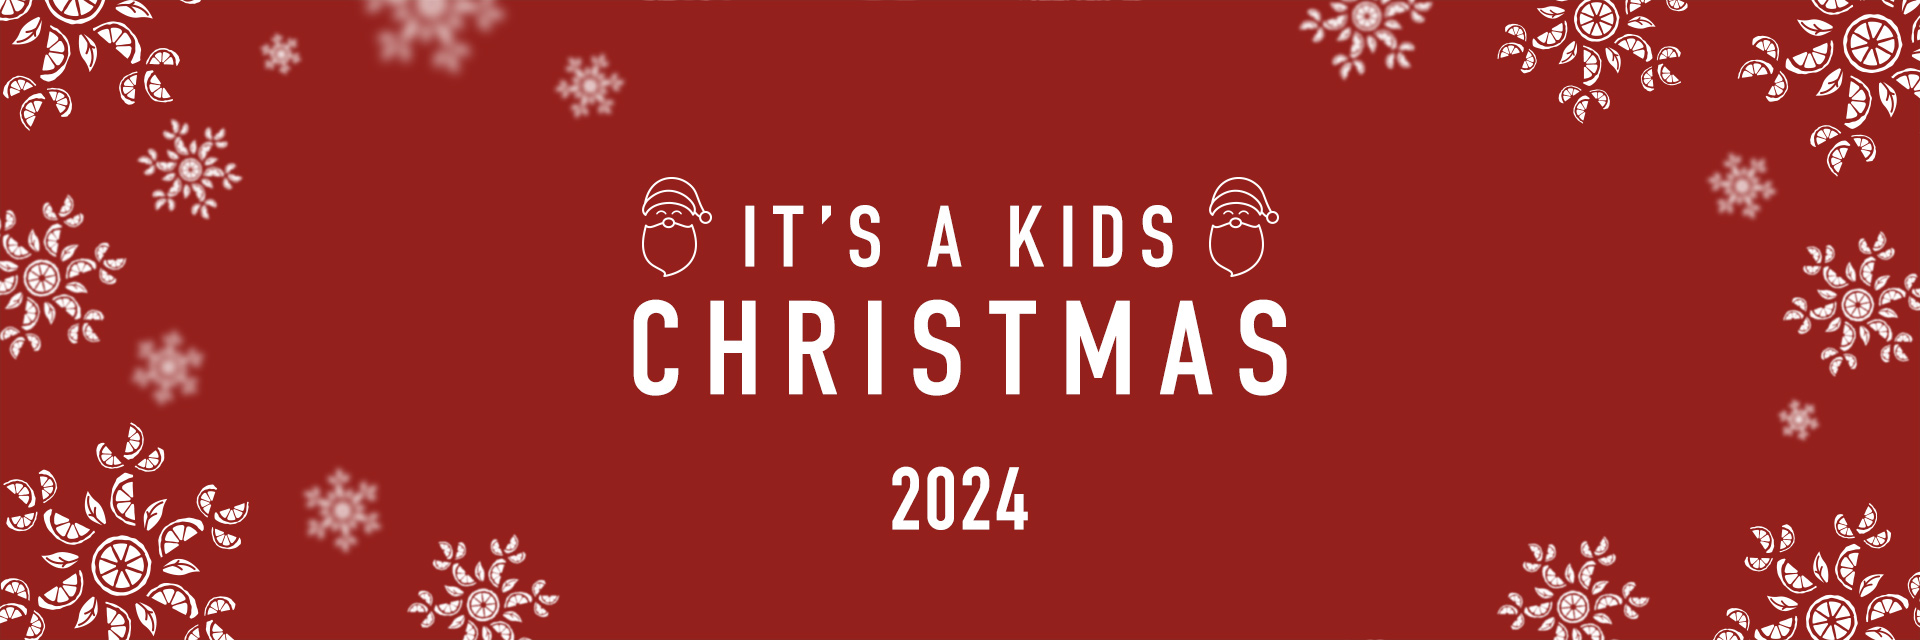 Kids Christmas Menu 2024 at Harvester Croft Park